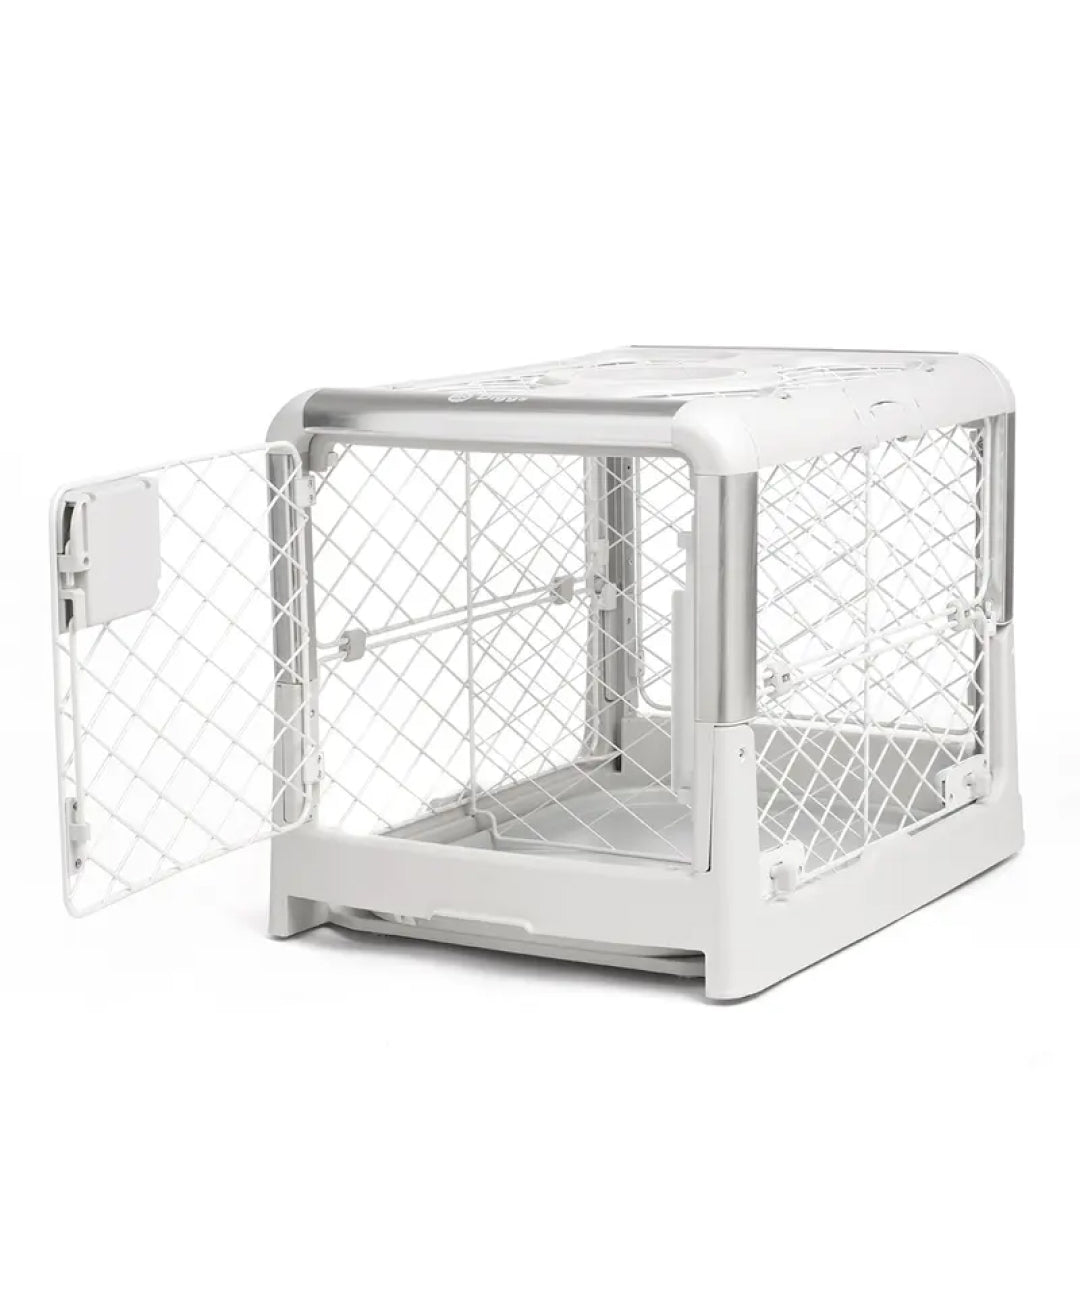 Diggs Revol Collapsible Dog Crate Pet Crate Diggs Inc. Ash S 